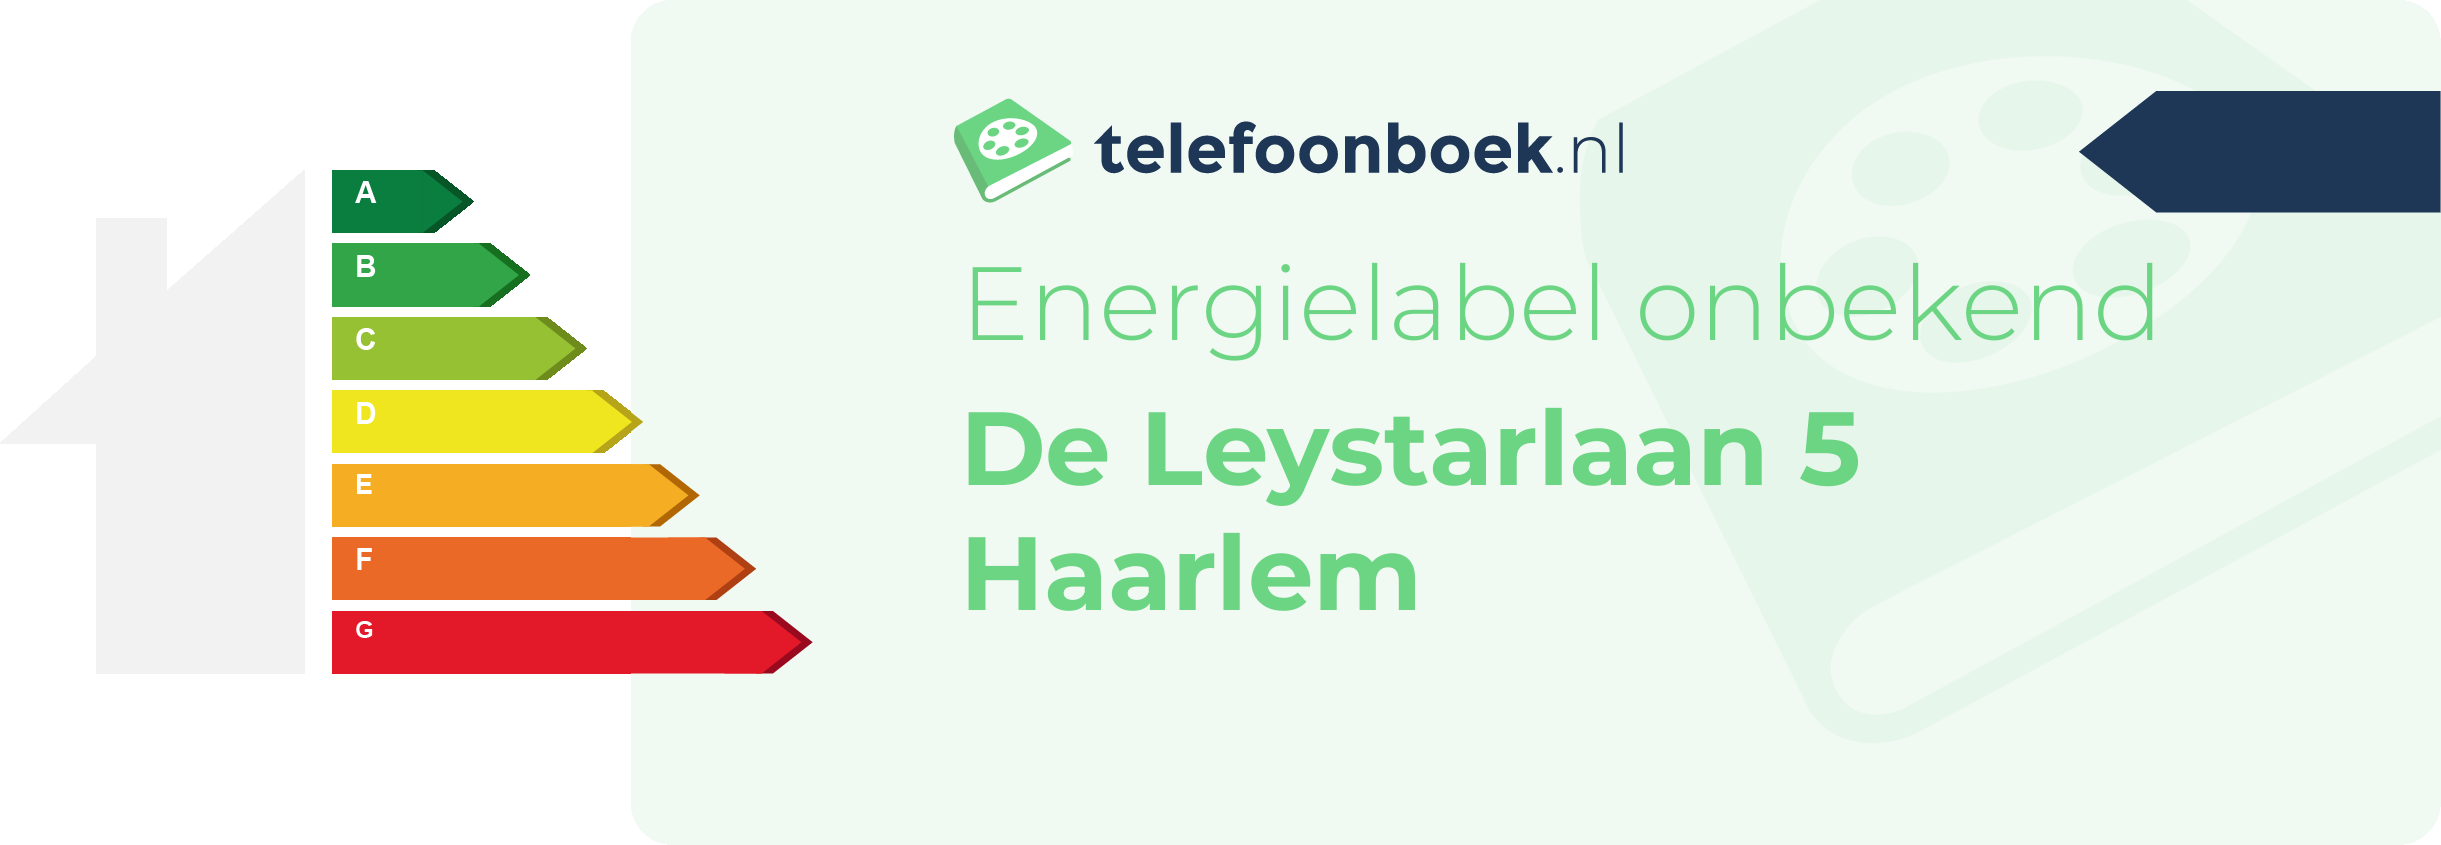 Energielabel De Leystarlaan 5 Haarlem